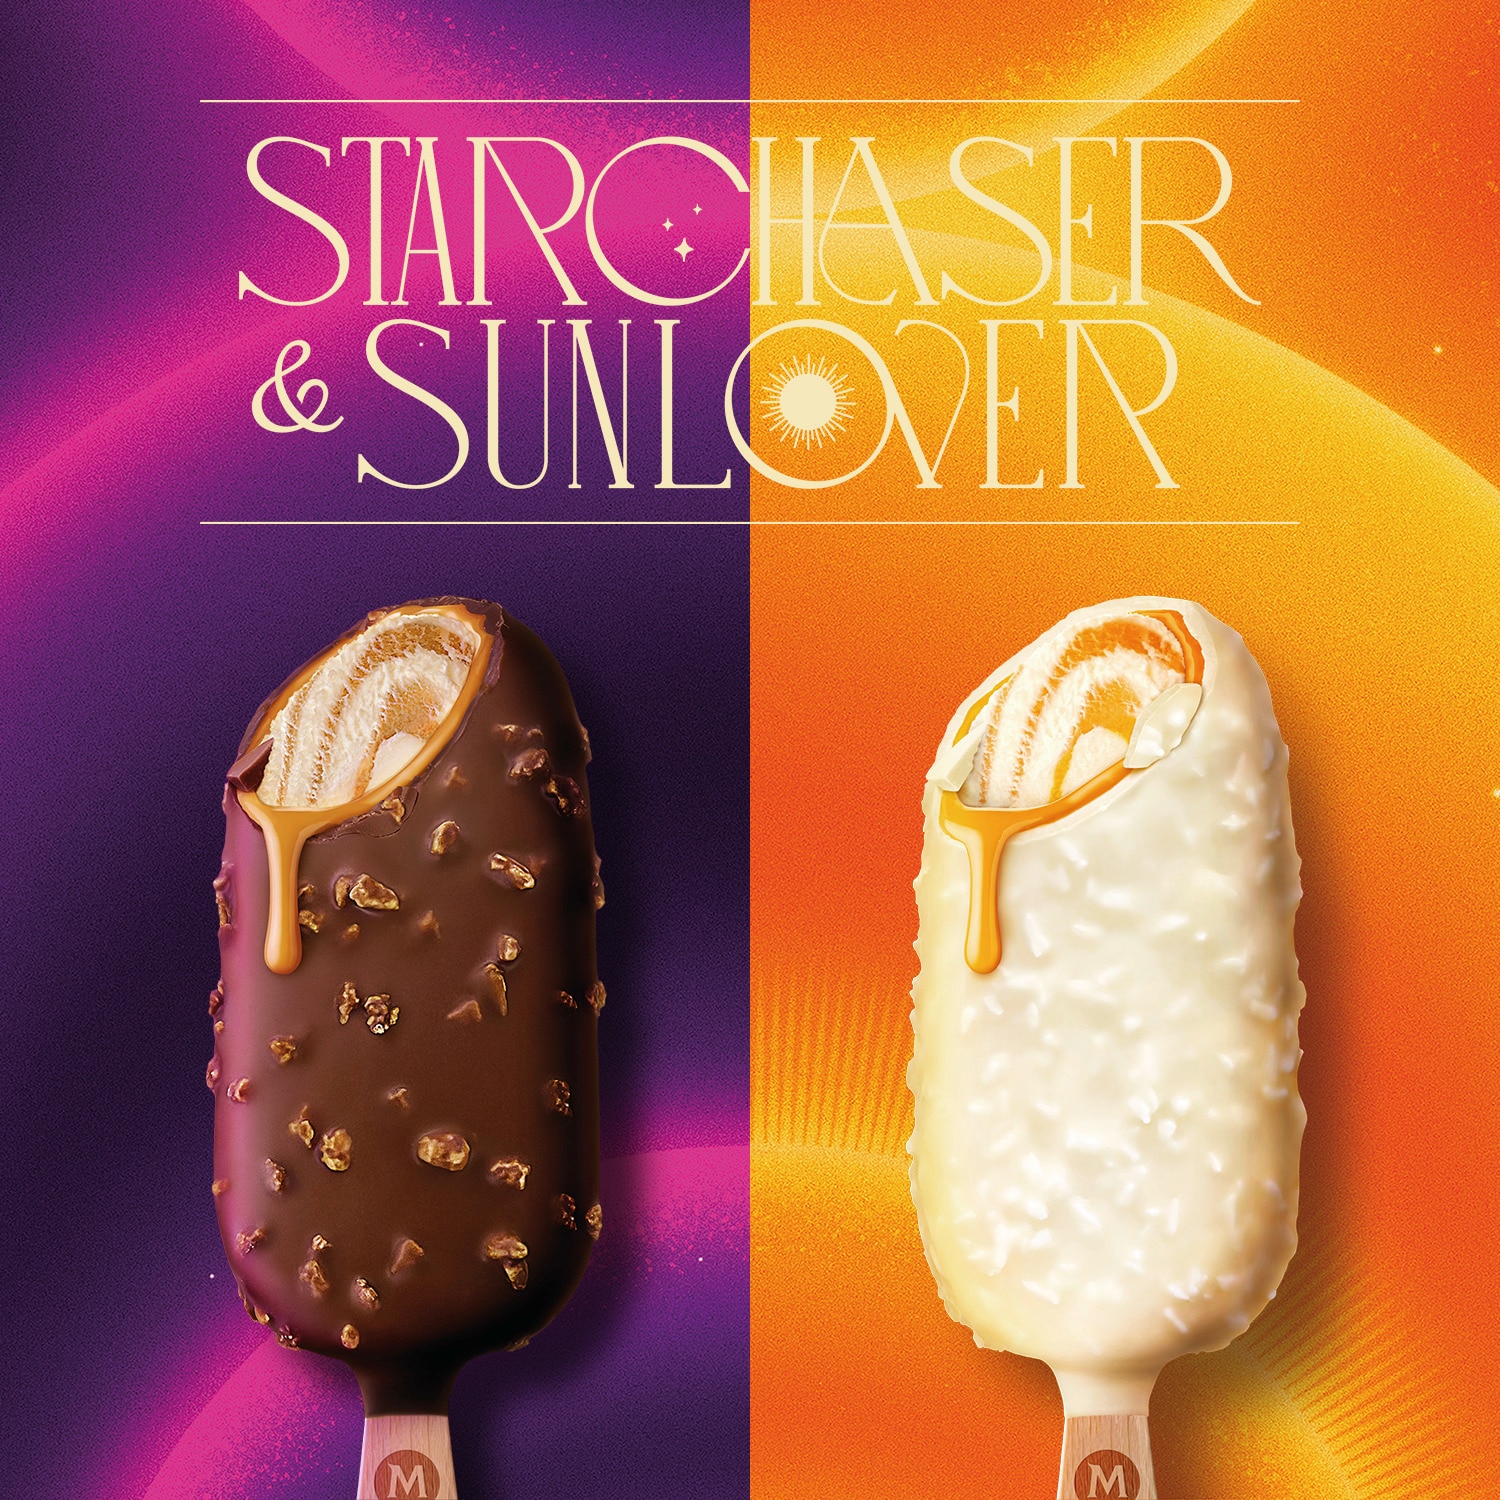 Magnum double Sunlover Starchaser ice cream